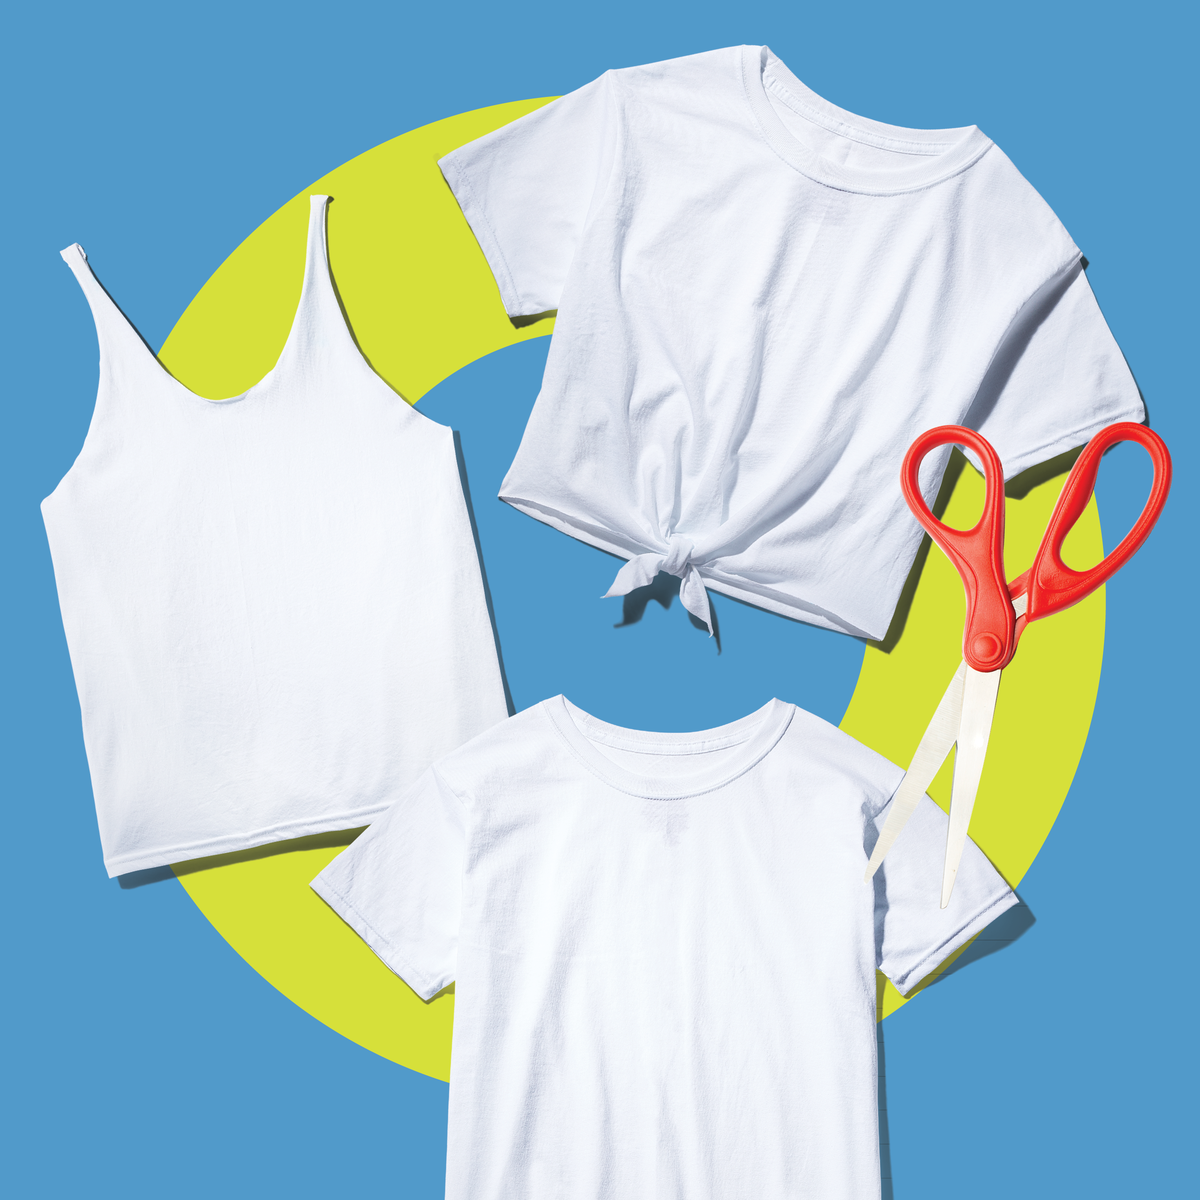 golf reinigen Neerwaarts How To Cut A T-Shirt Into A Cool Workout Top – 5 Ways To Cut Tees